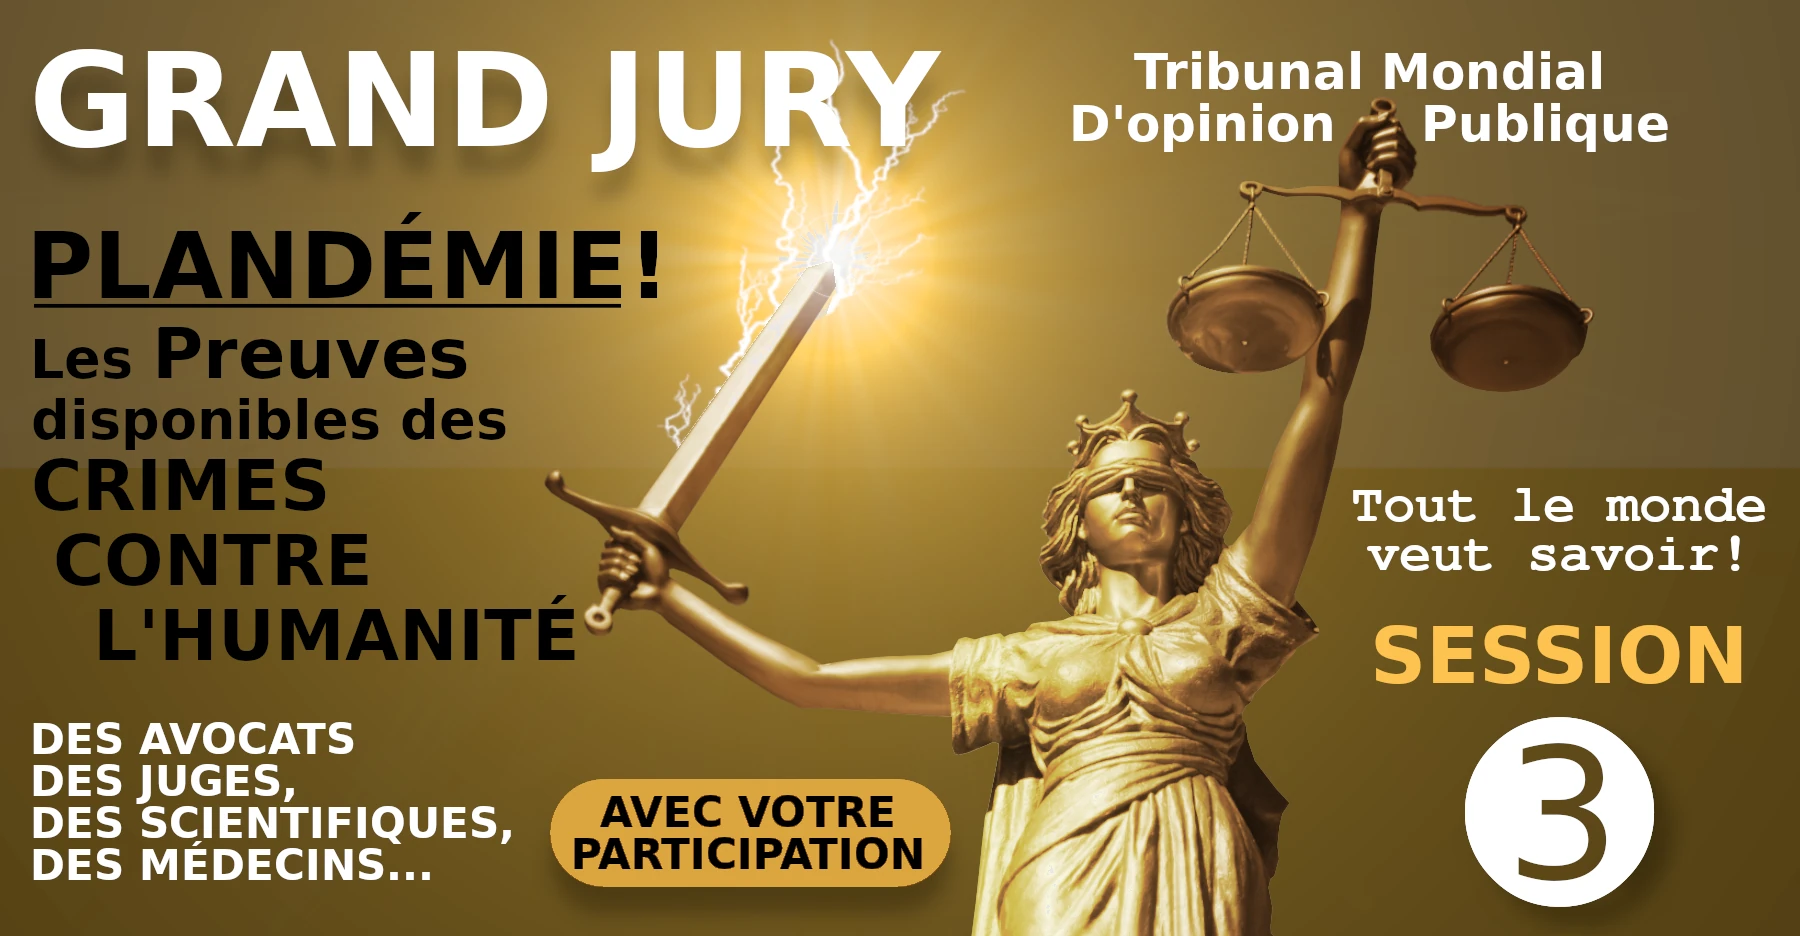 GRAND JURY 3 - JUSTICE ENSEMBLE!!!